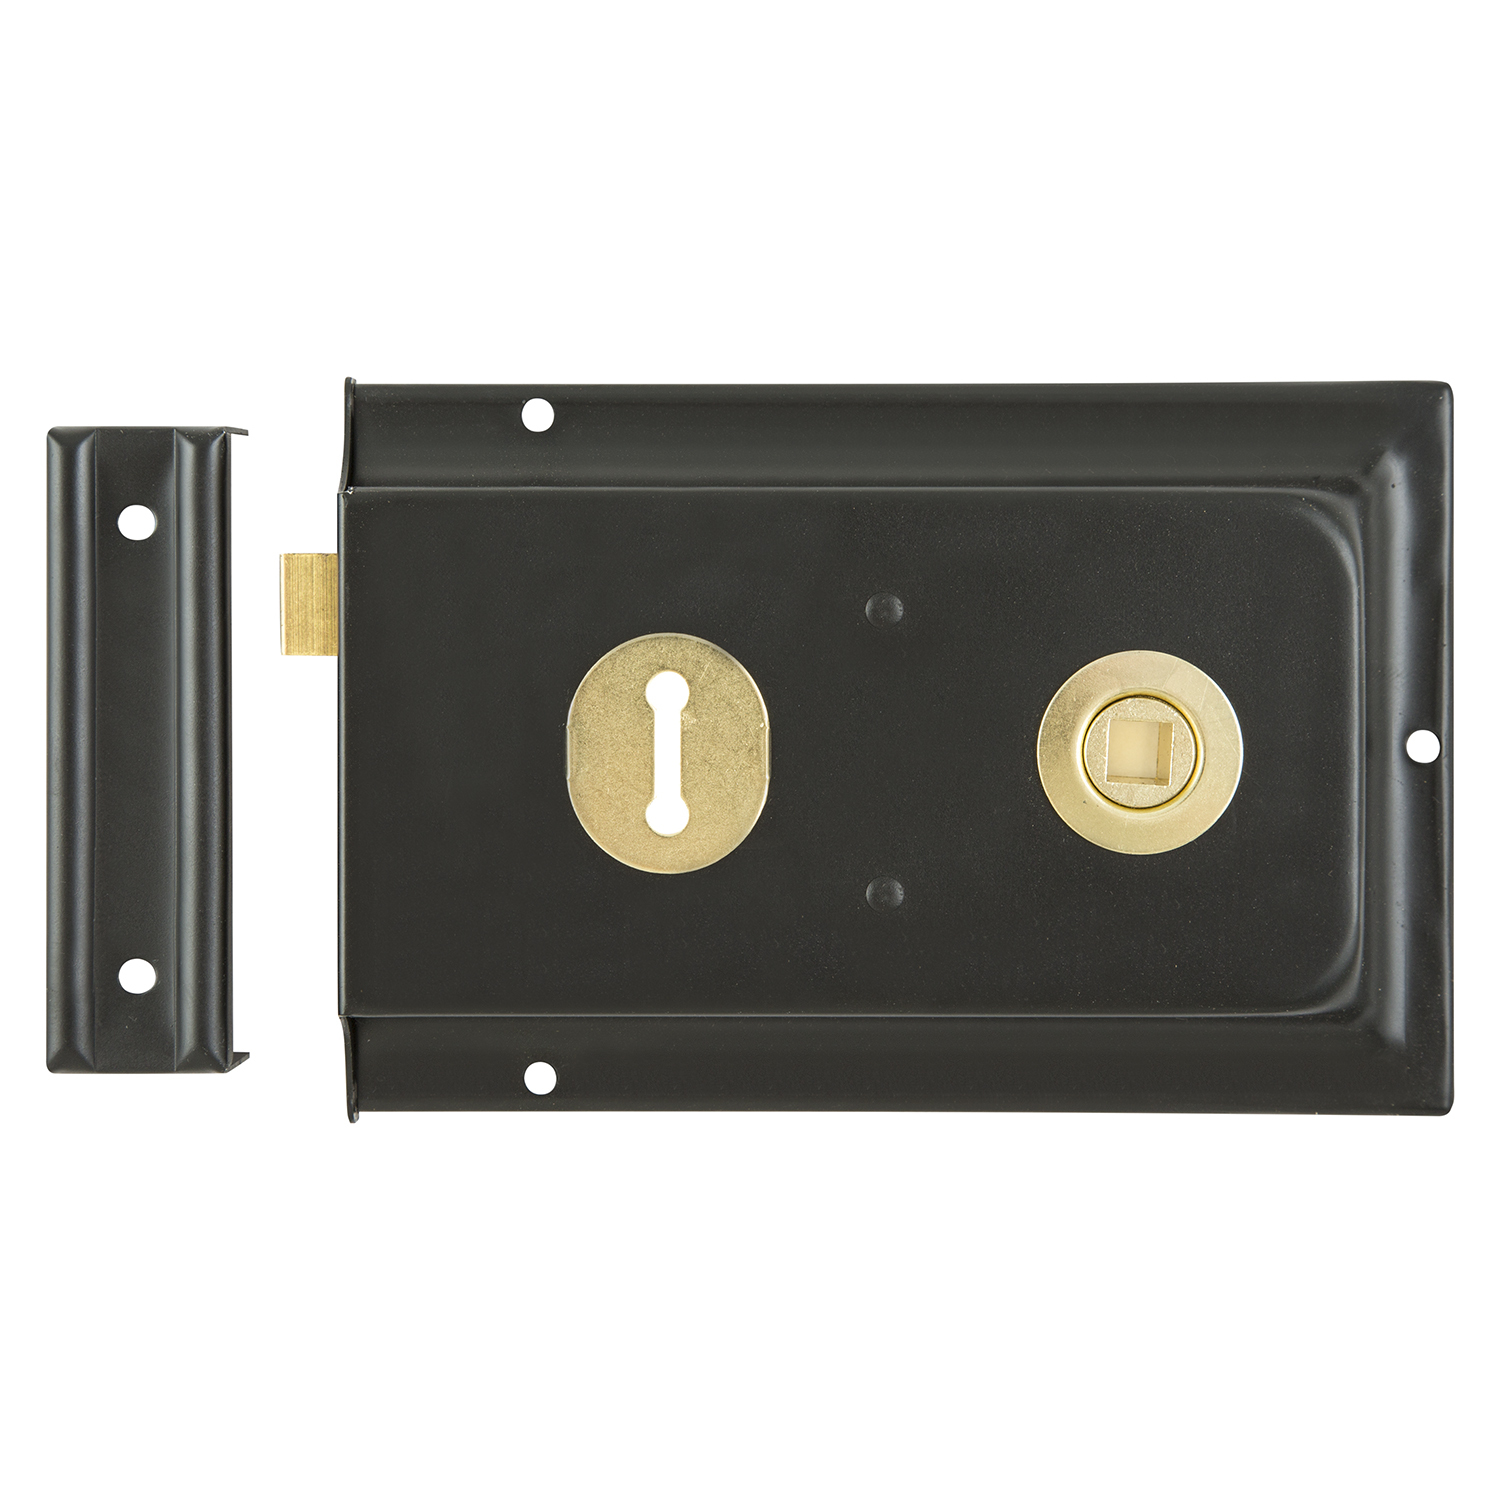 Hiatt Black Rim Sash Lock with 2 Keys Image 2